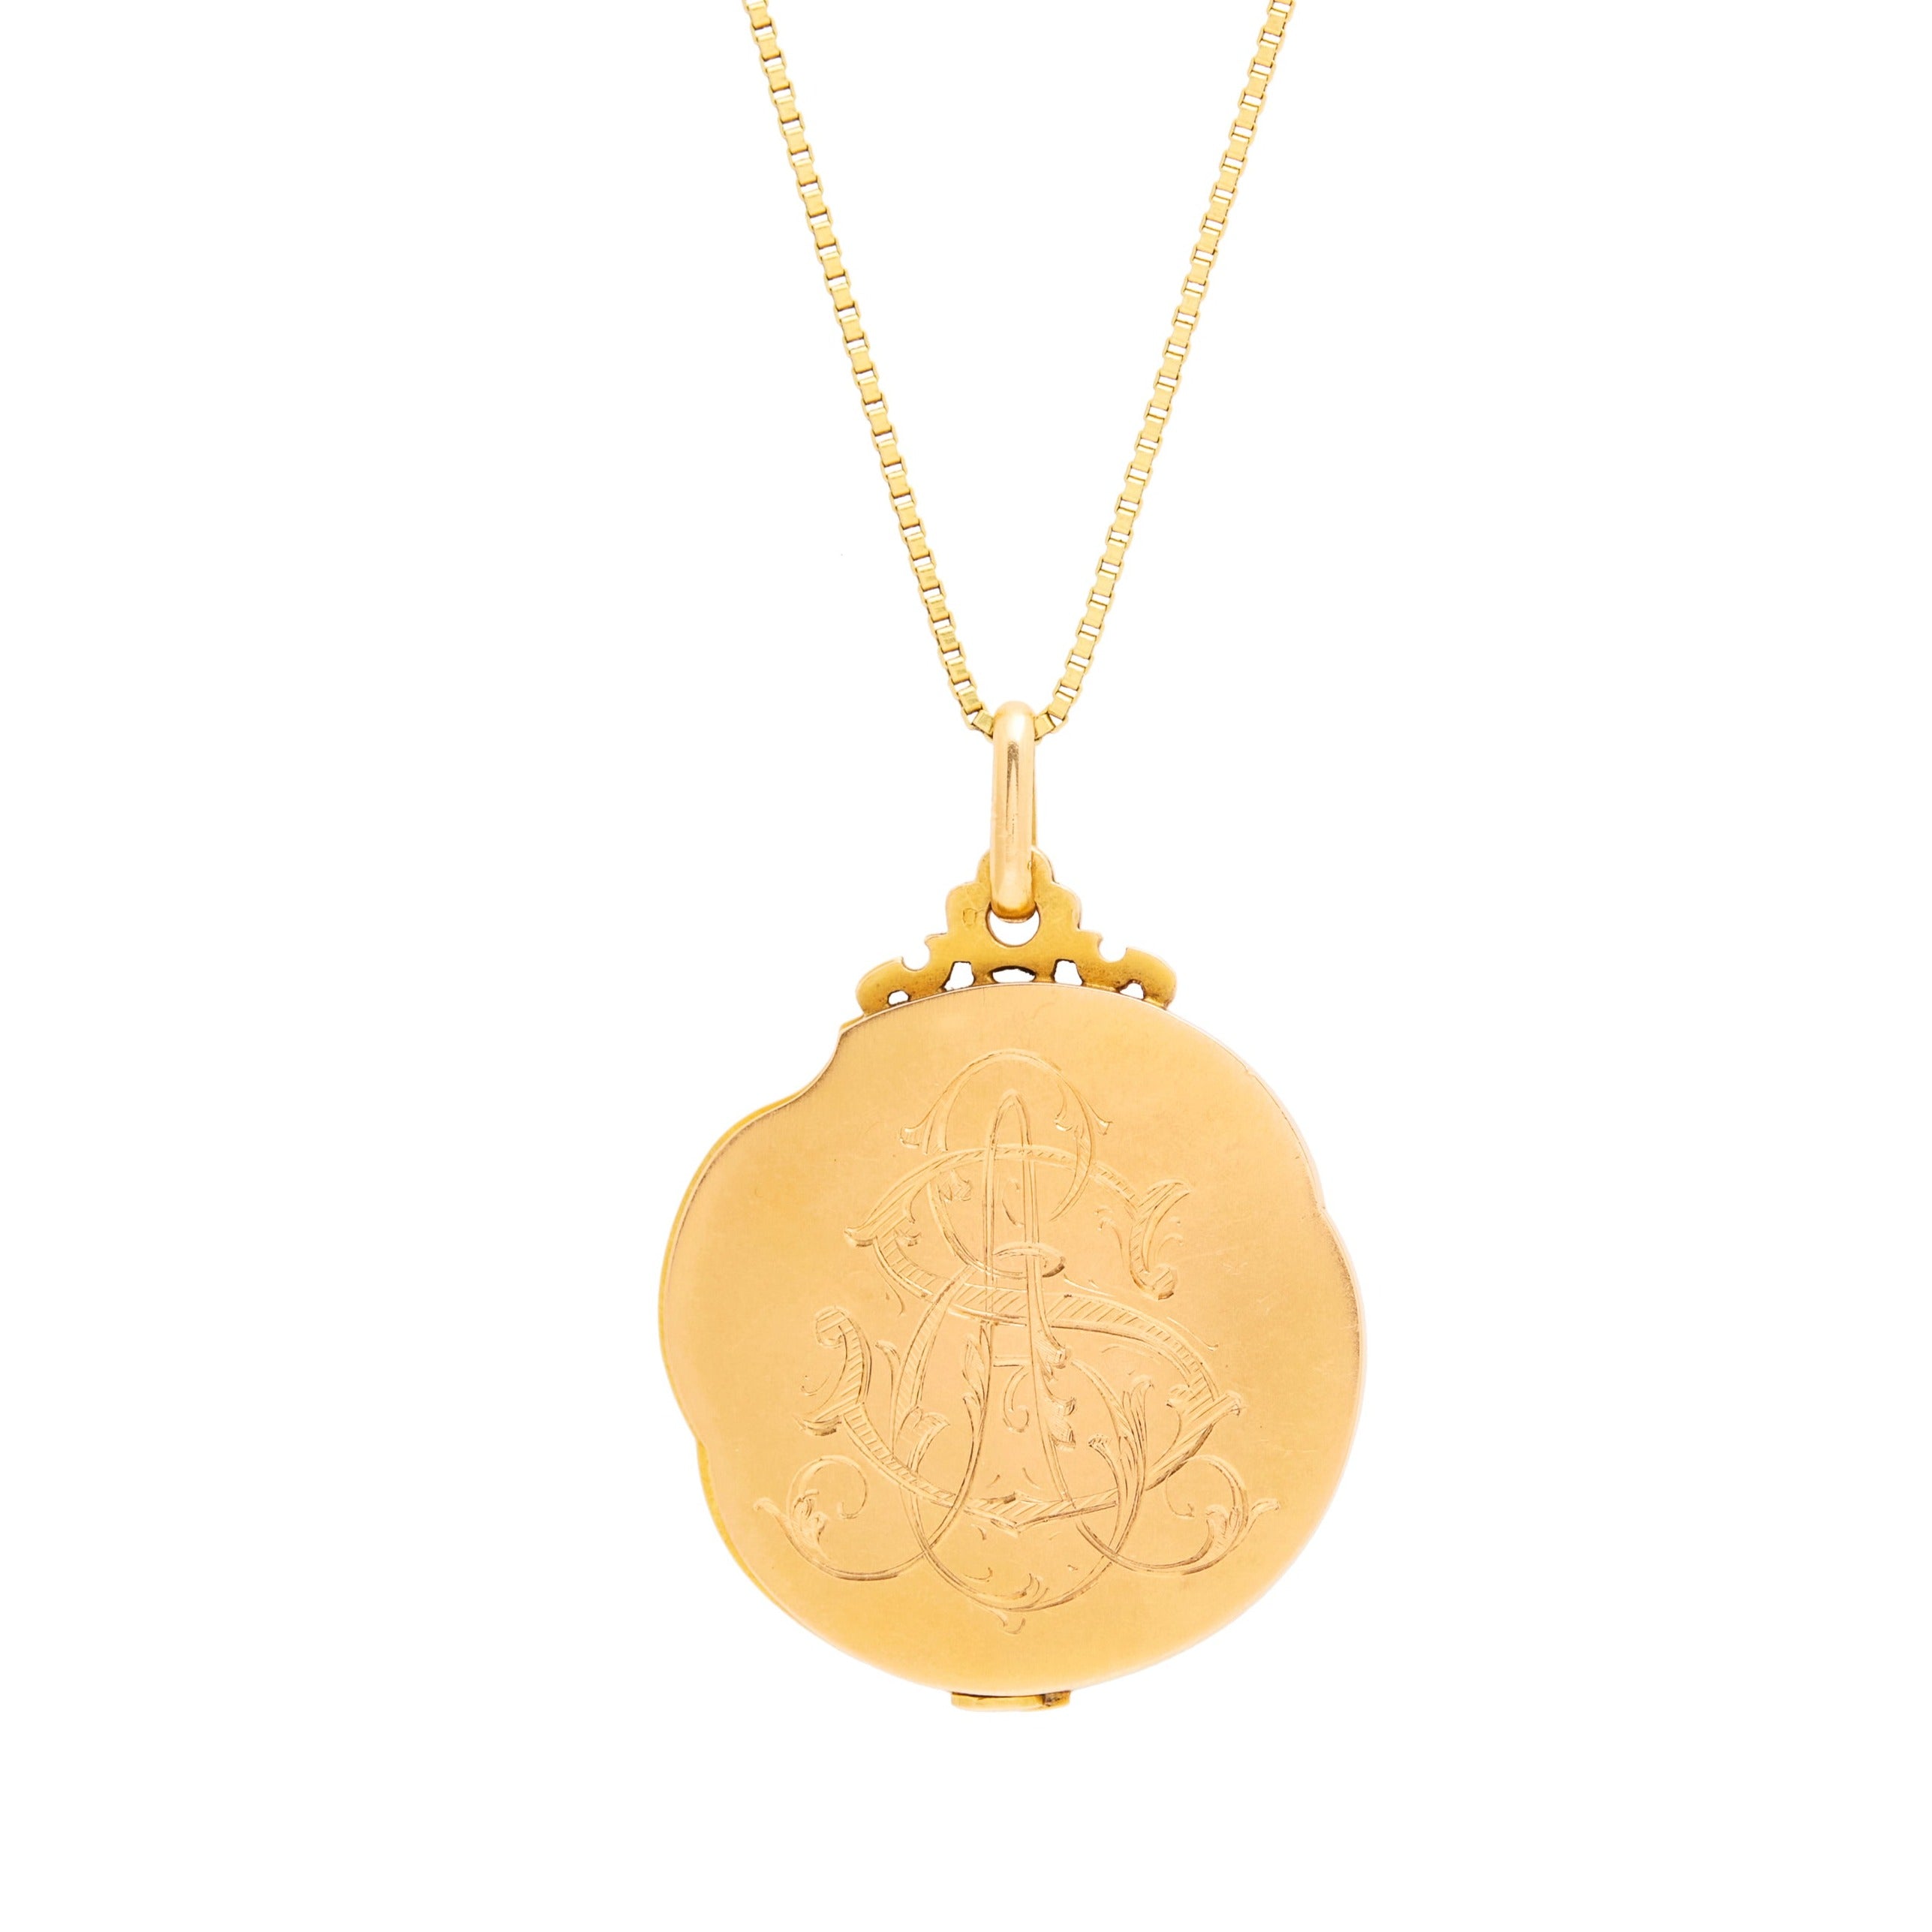 French Art Nouveau 18K Gold and Diamond Sliding Locket